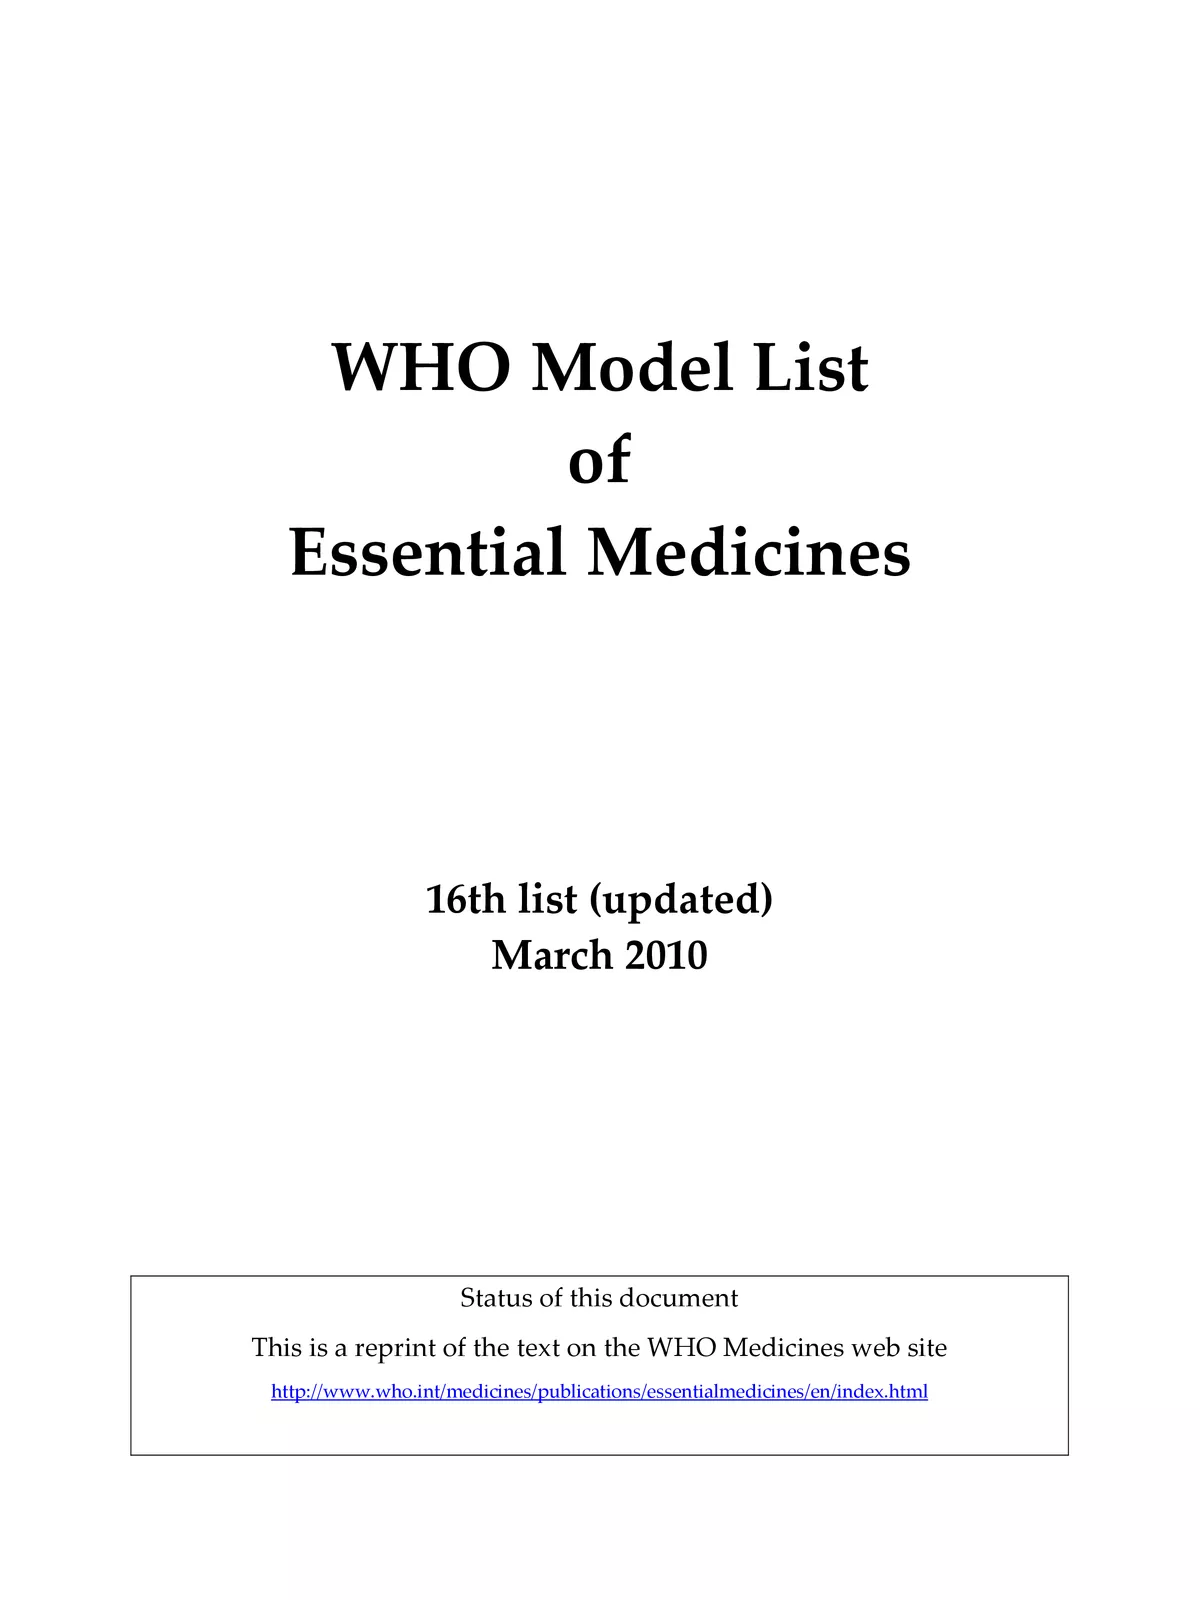 Essential Medicines List